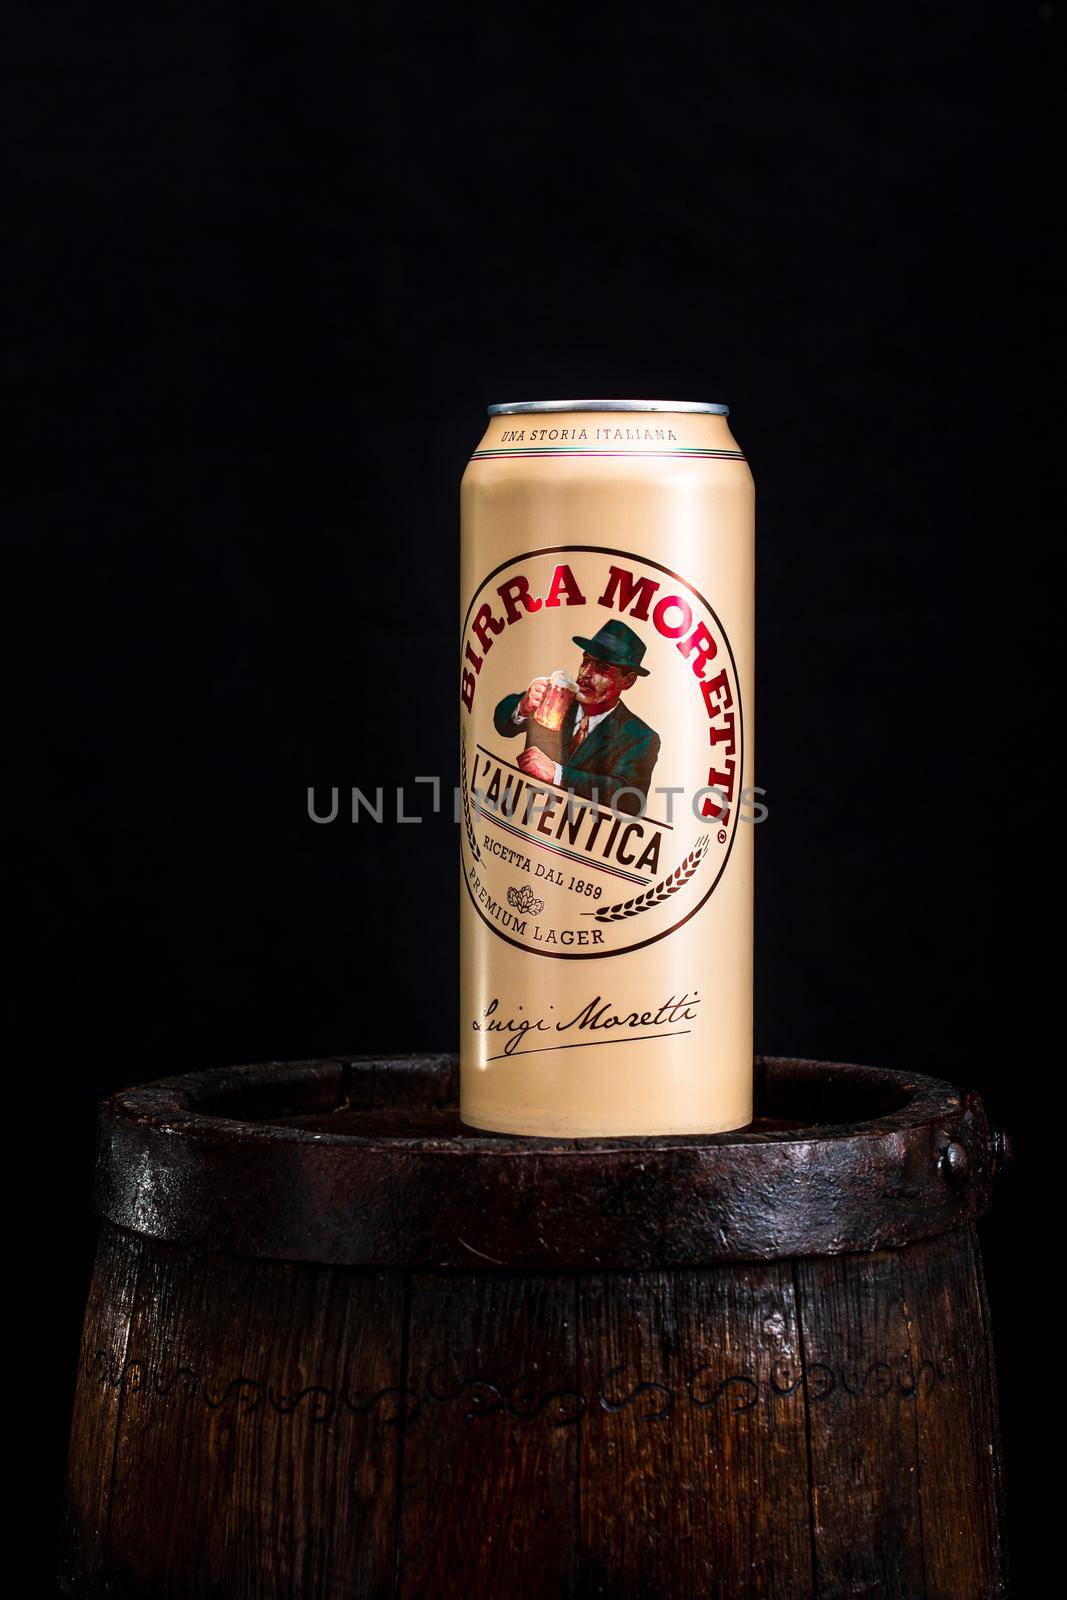 Can of Birra Moretti beer on wooden barrel with dark background. Illustrative editorial photo Bucharest, Romania, 2021 by vladispas